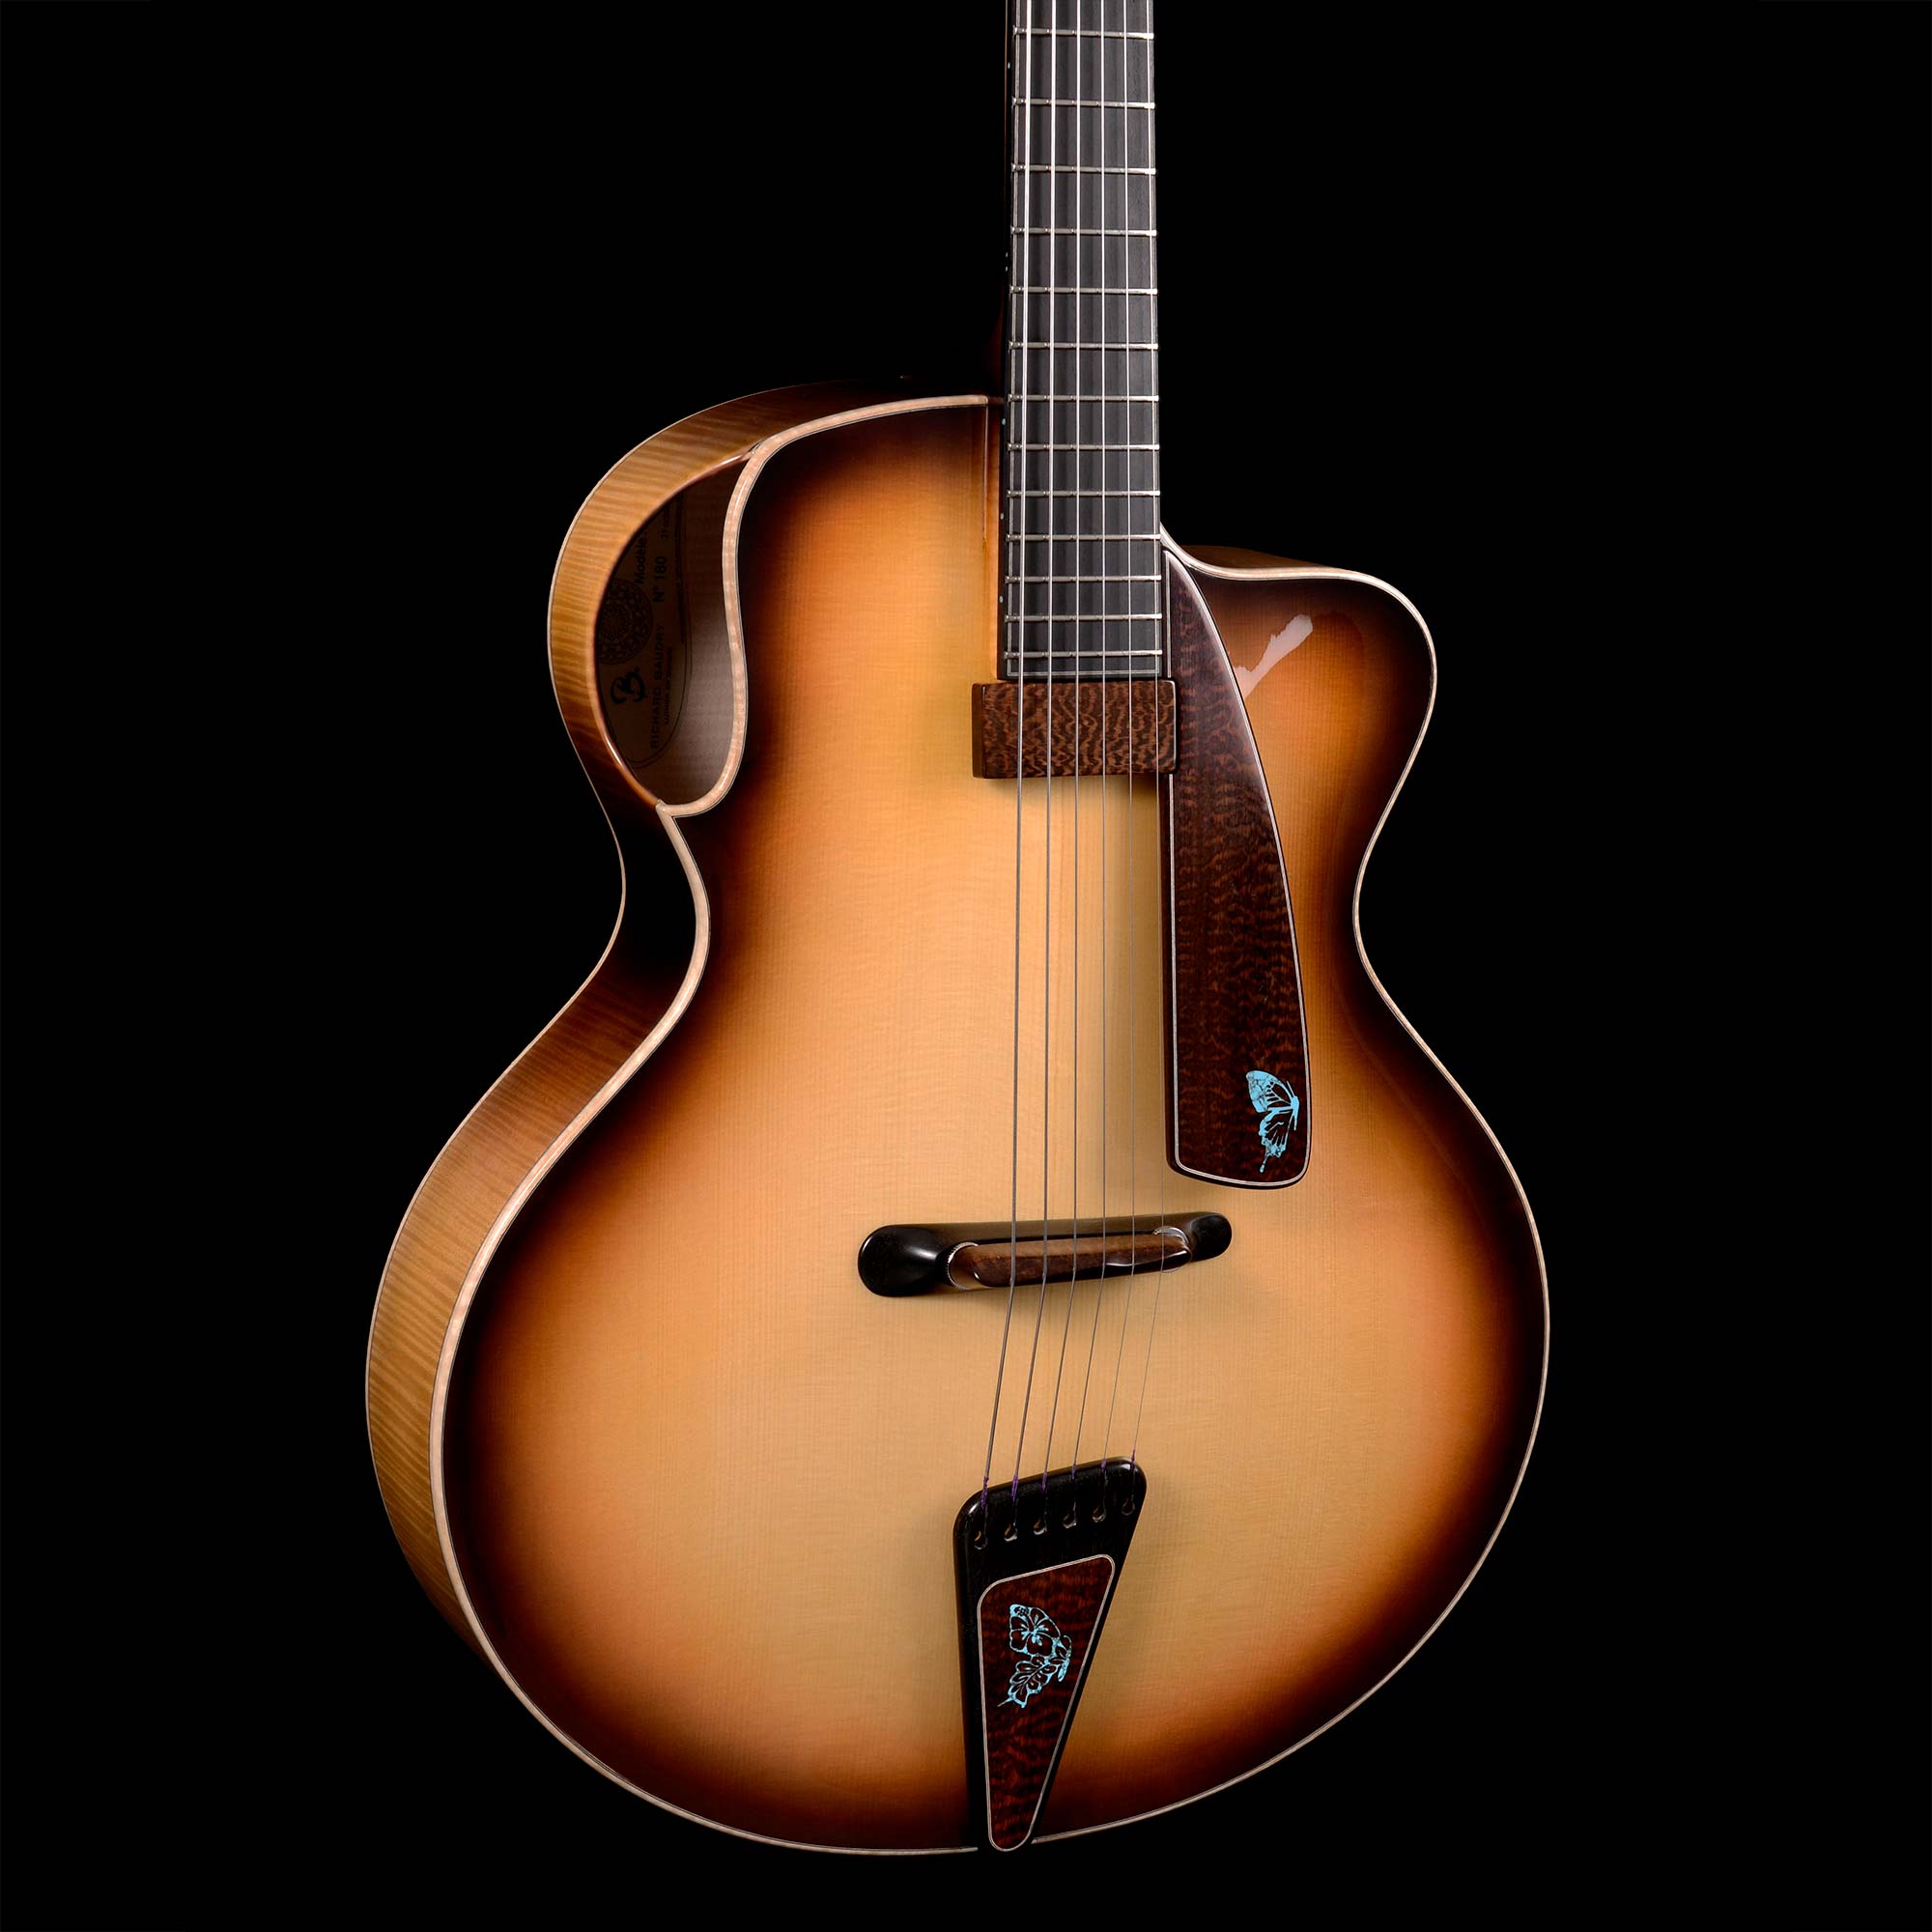 Guitare modèle Jazz Betty - Richard Baudry - Luthier